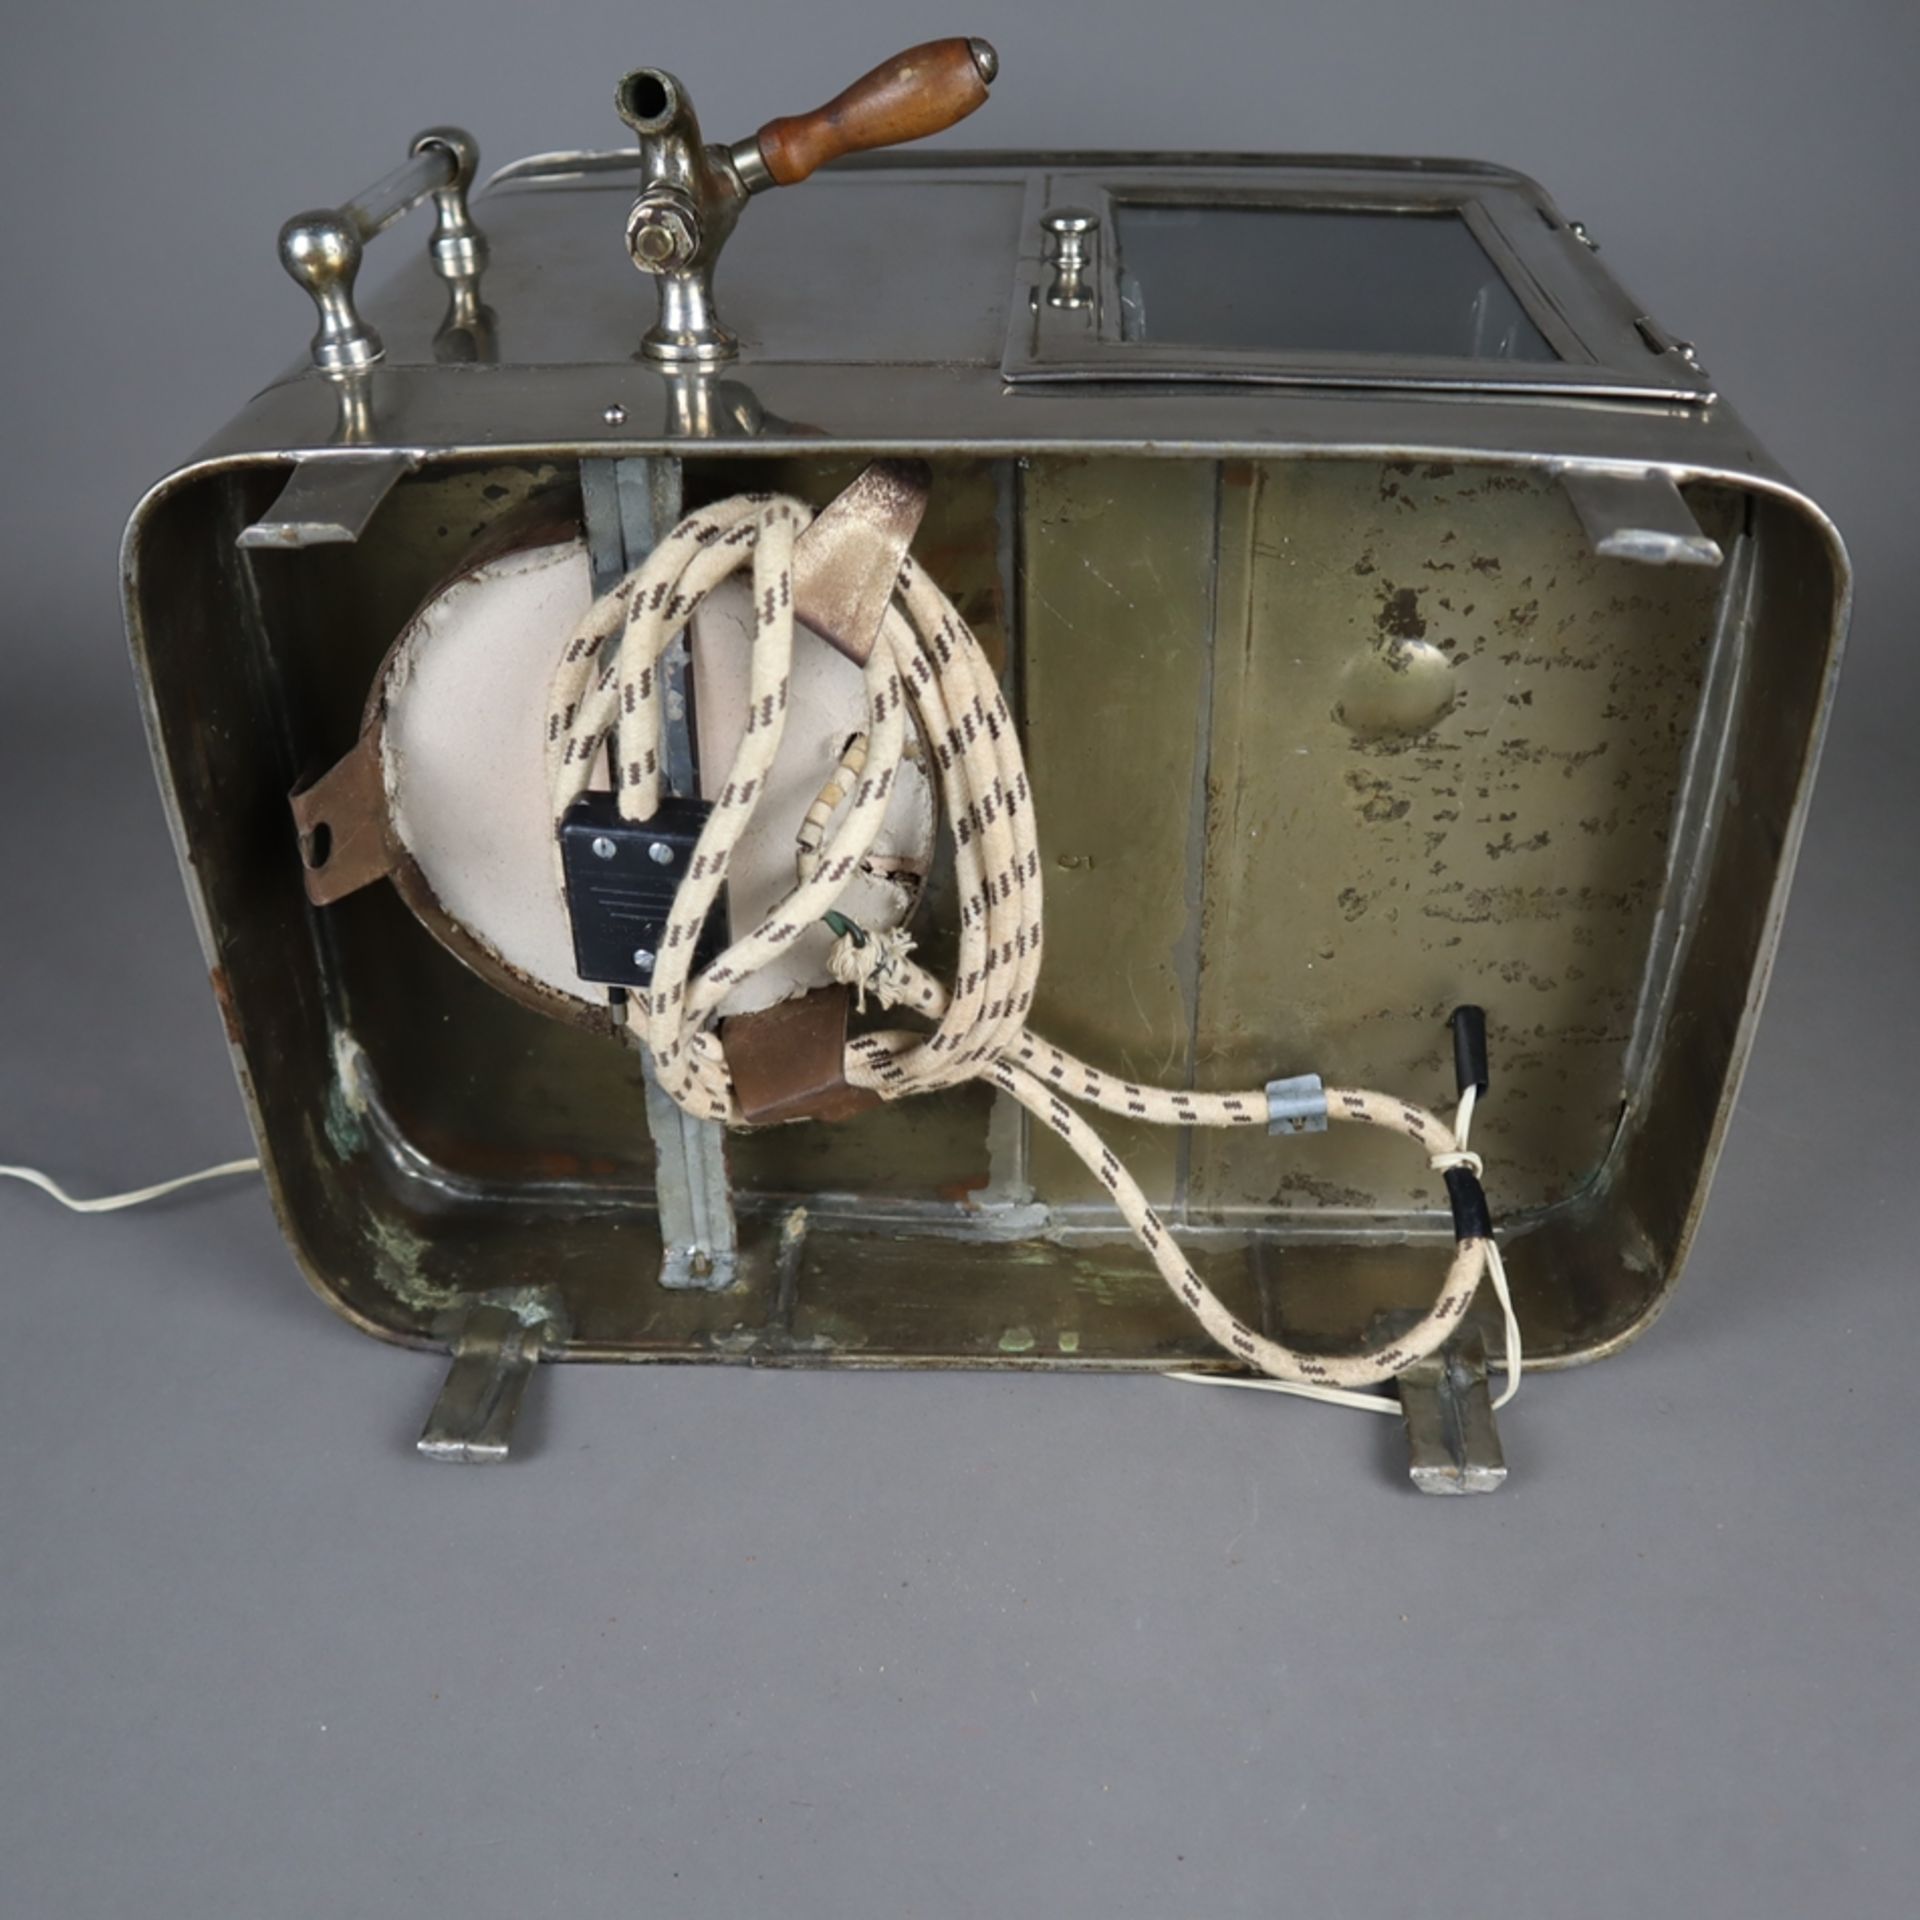 Medizinisches Gerät - wohl Sterilisator, Metall/Glas/Holz, elektrifiziert, Funktion nicht geprüft, - Image 7 of 7